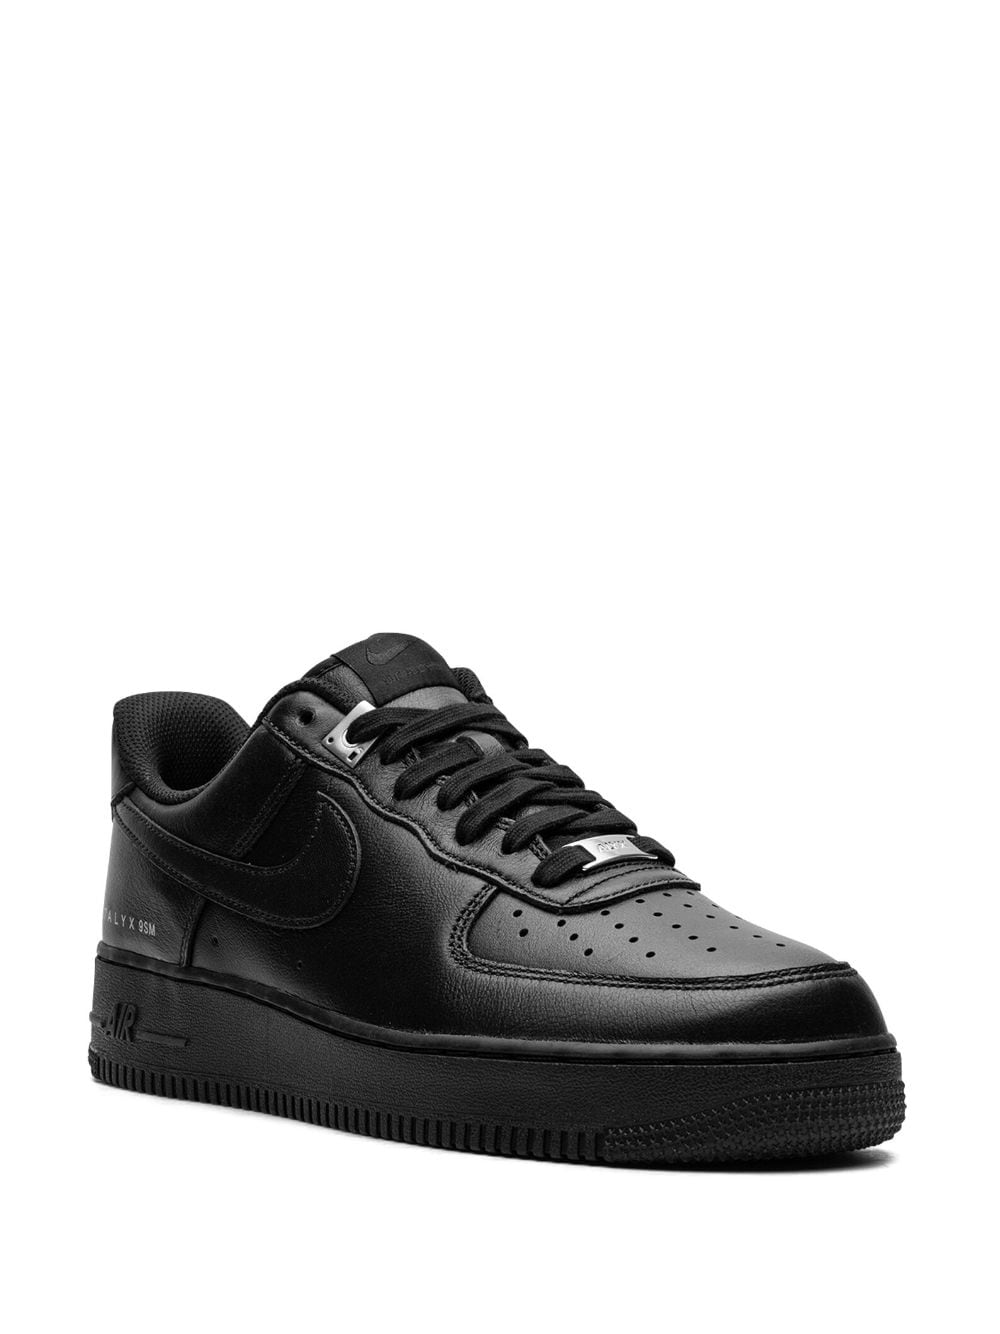 Image 2 of Nike x 1017 Alyx 9SM Air Force 1 "Black" sneaker